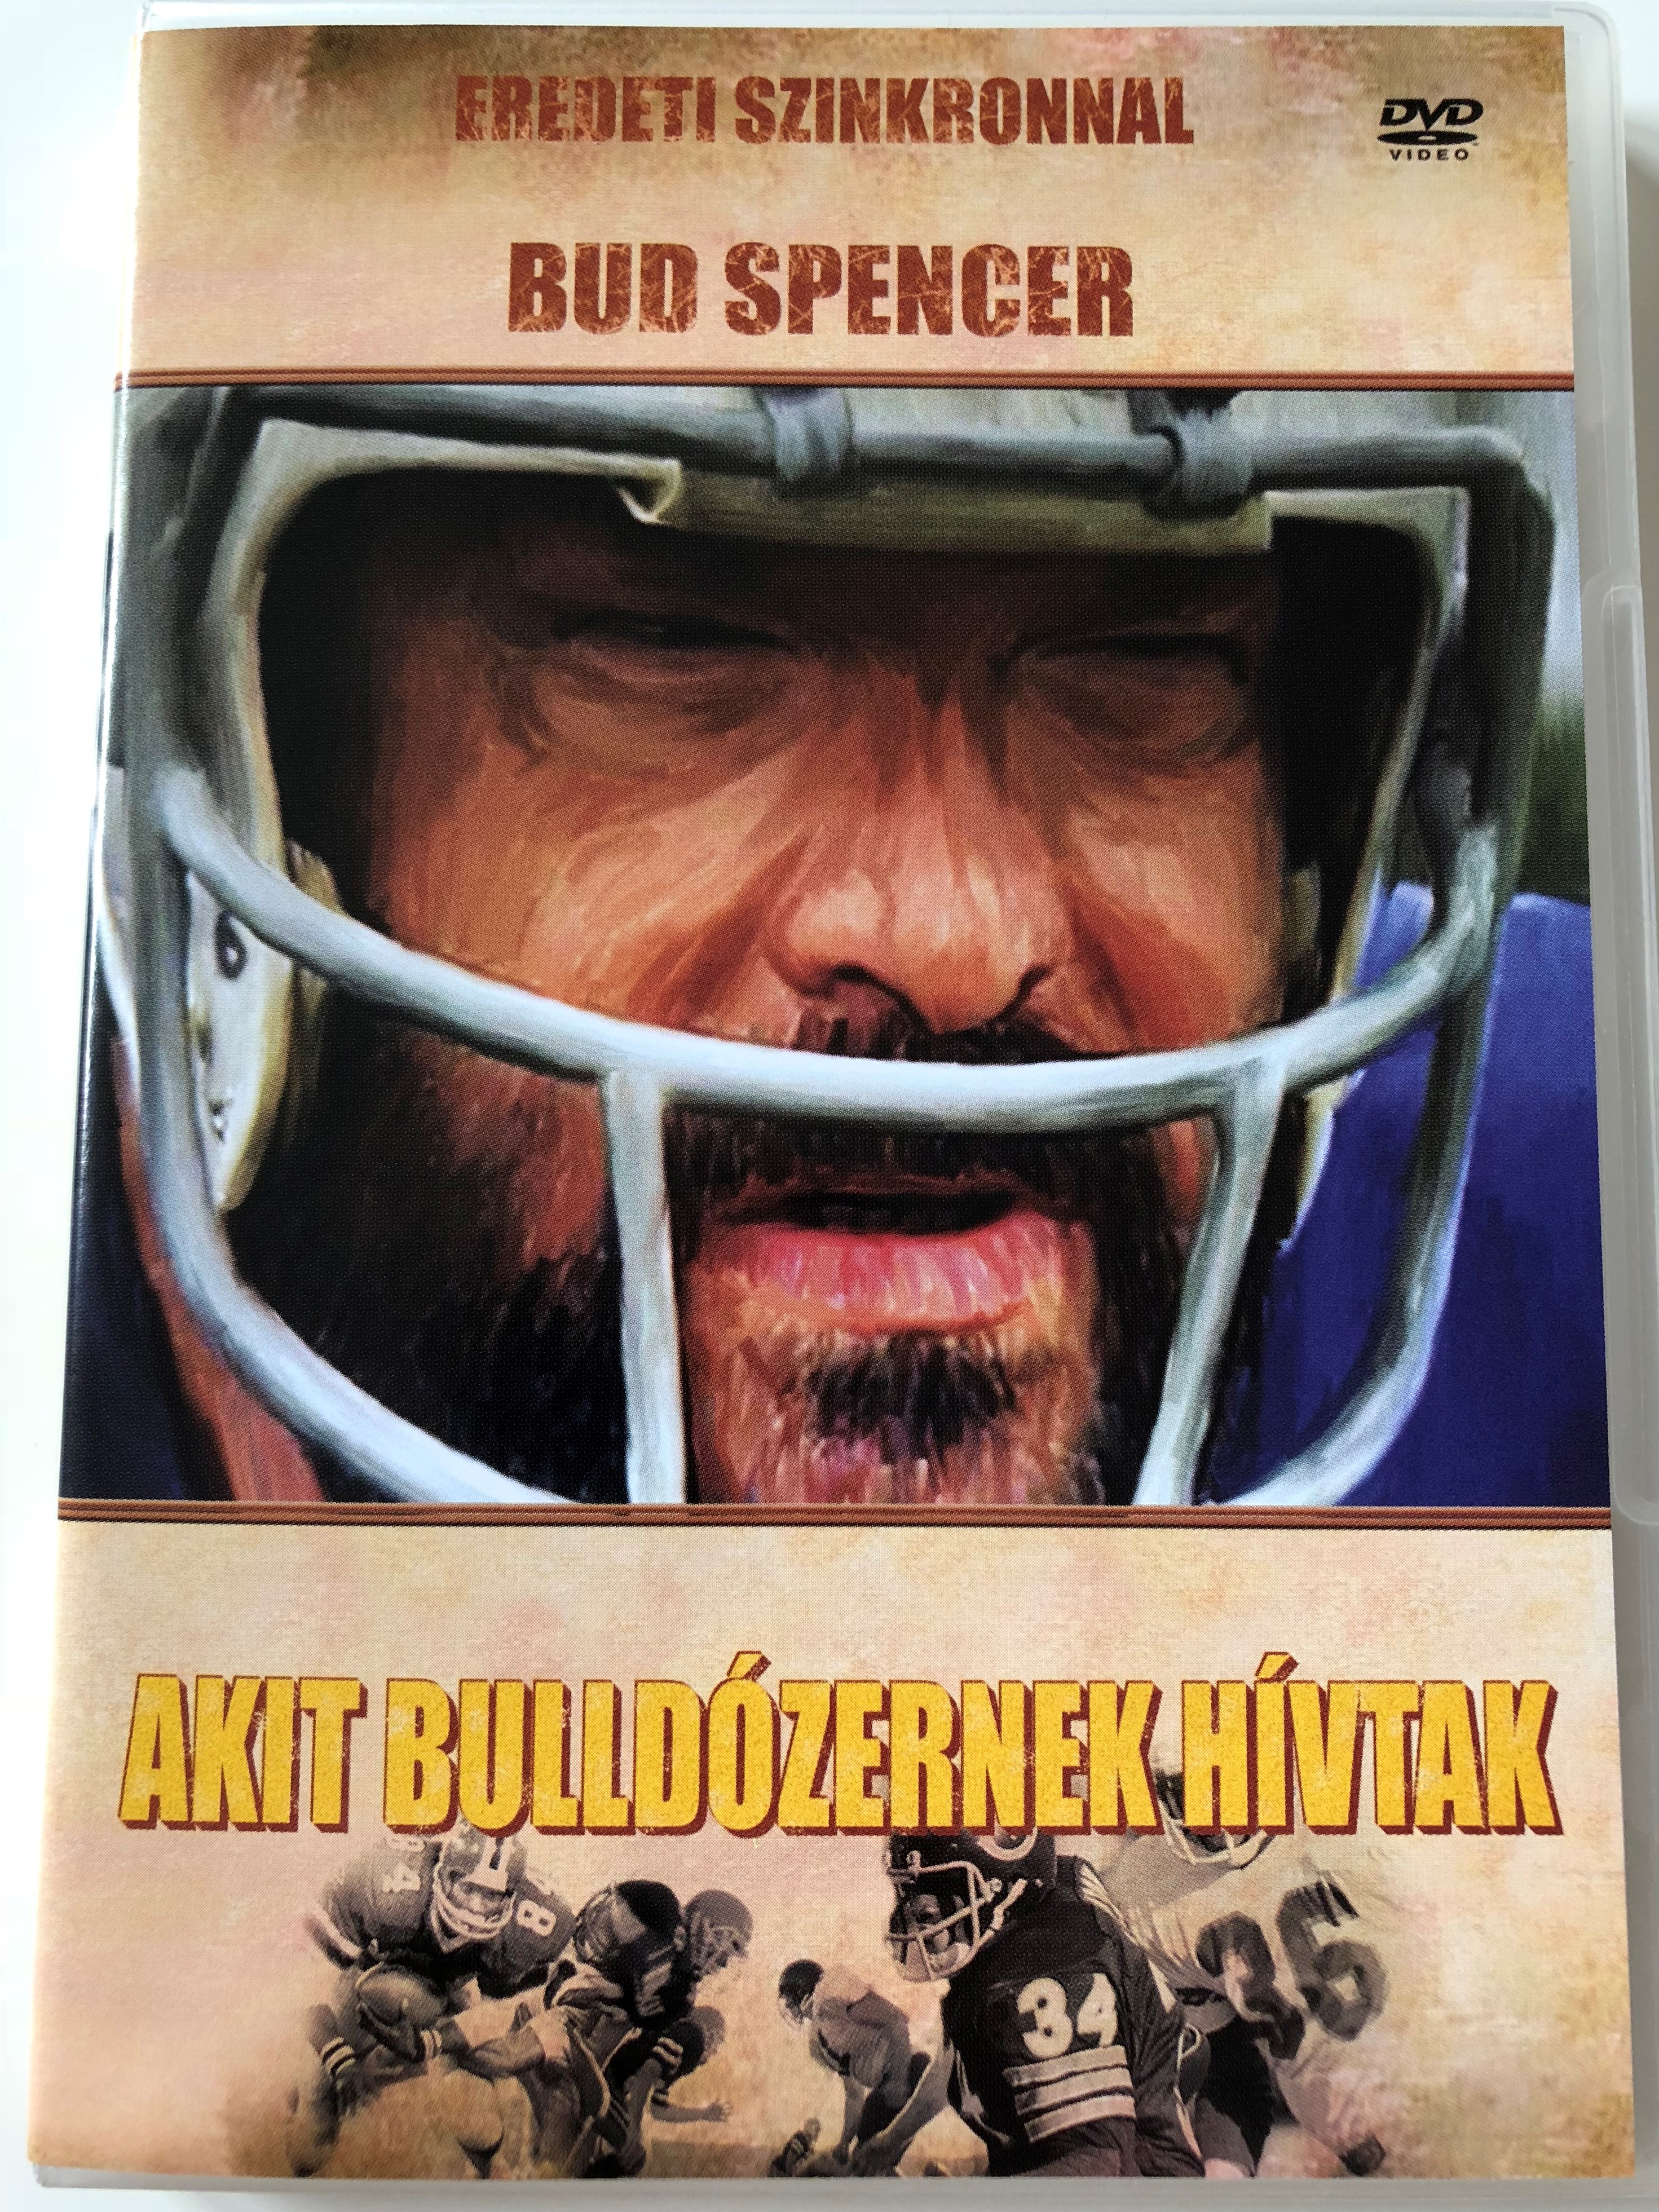 Akit Buldózernek hívtak DVD 1978 (Lo chiamavano Bulldozer) / Audio:  Hungarian / Starring: Bud Spencer / Directed by: Michele Lupo -  bibleinmylanguage